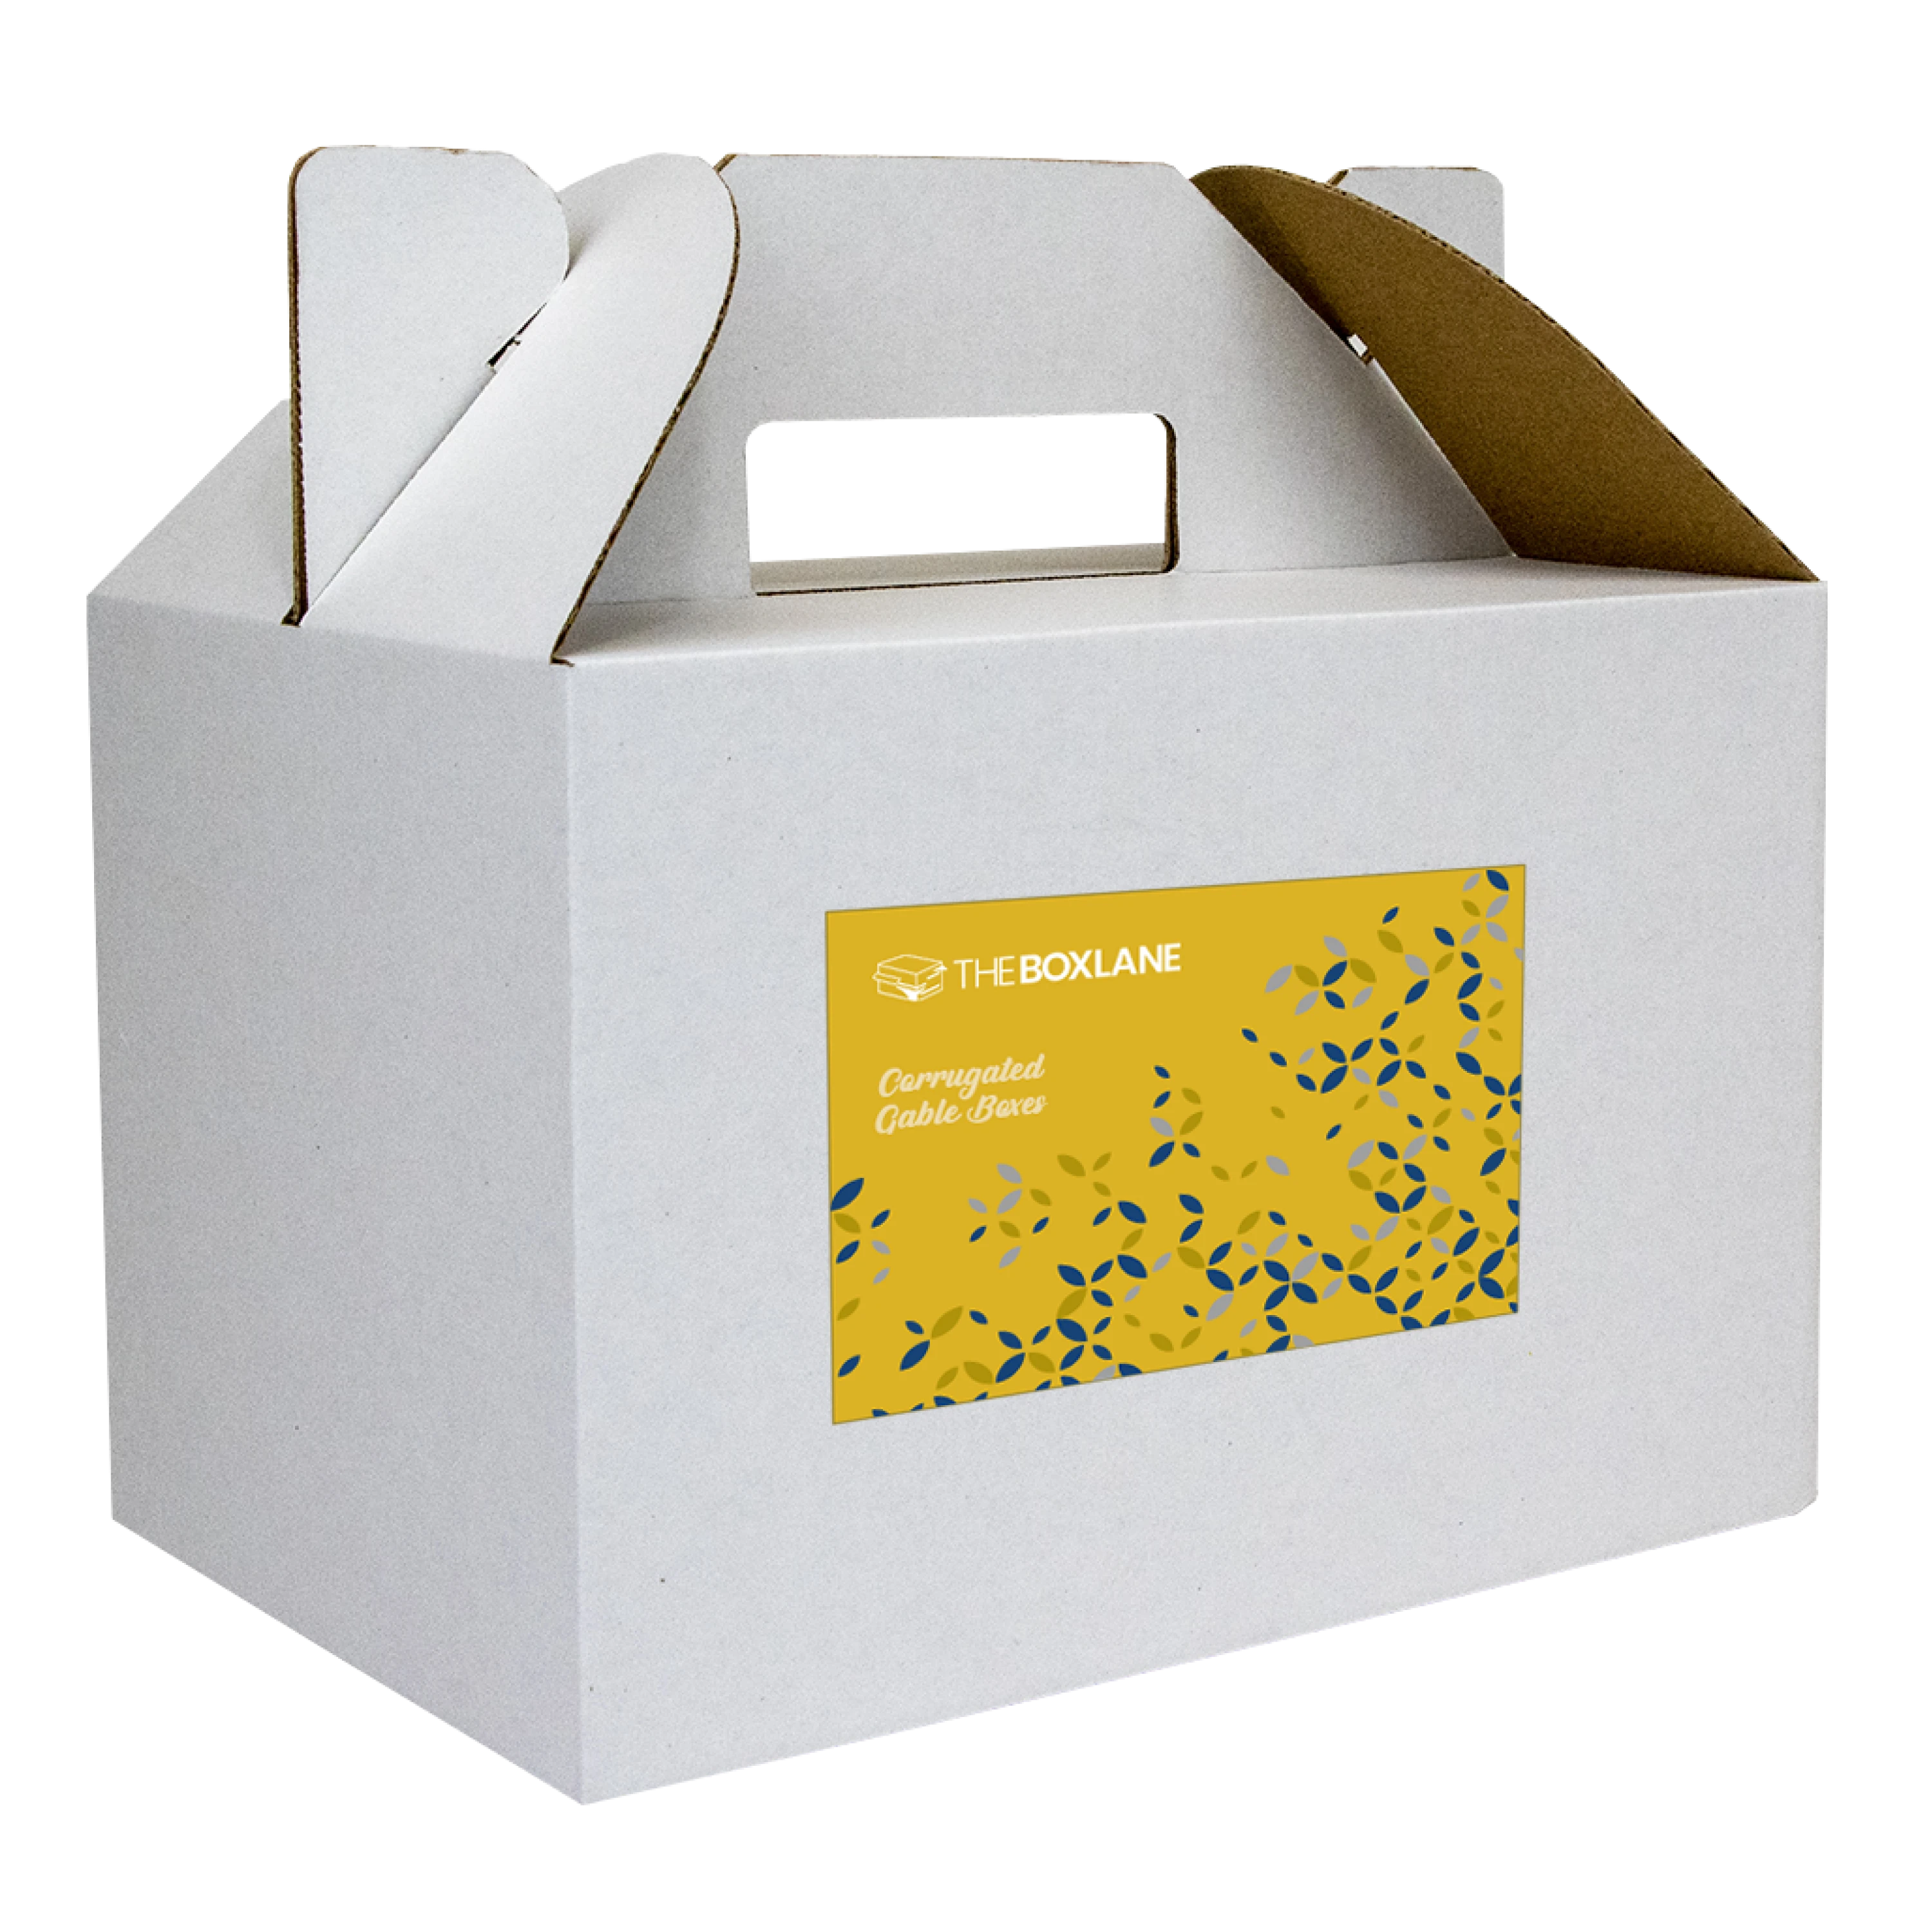 Carousel Corrugated Gable Boxes packaging image 2 | The Box Lane